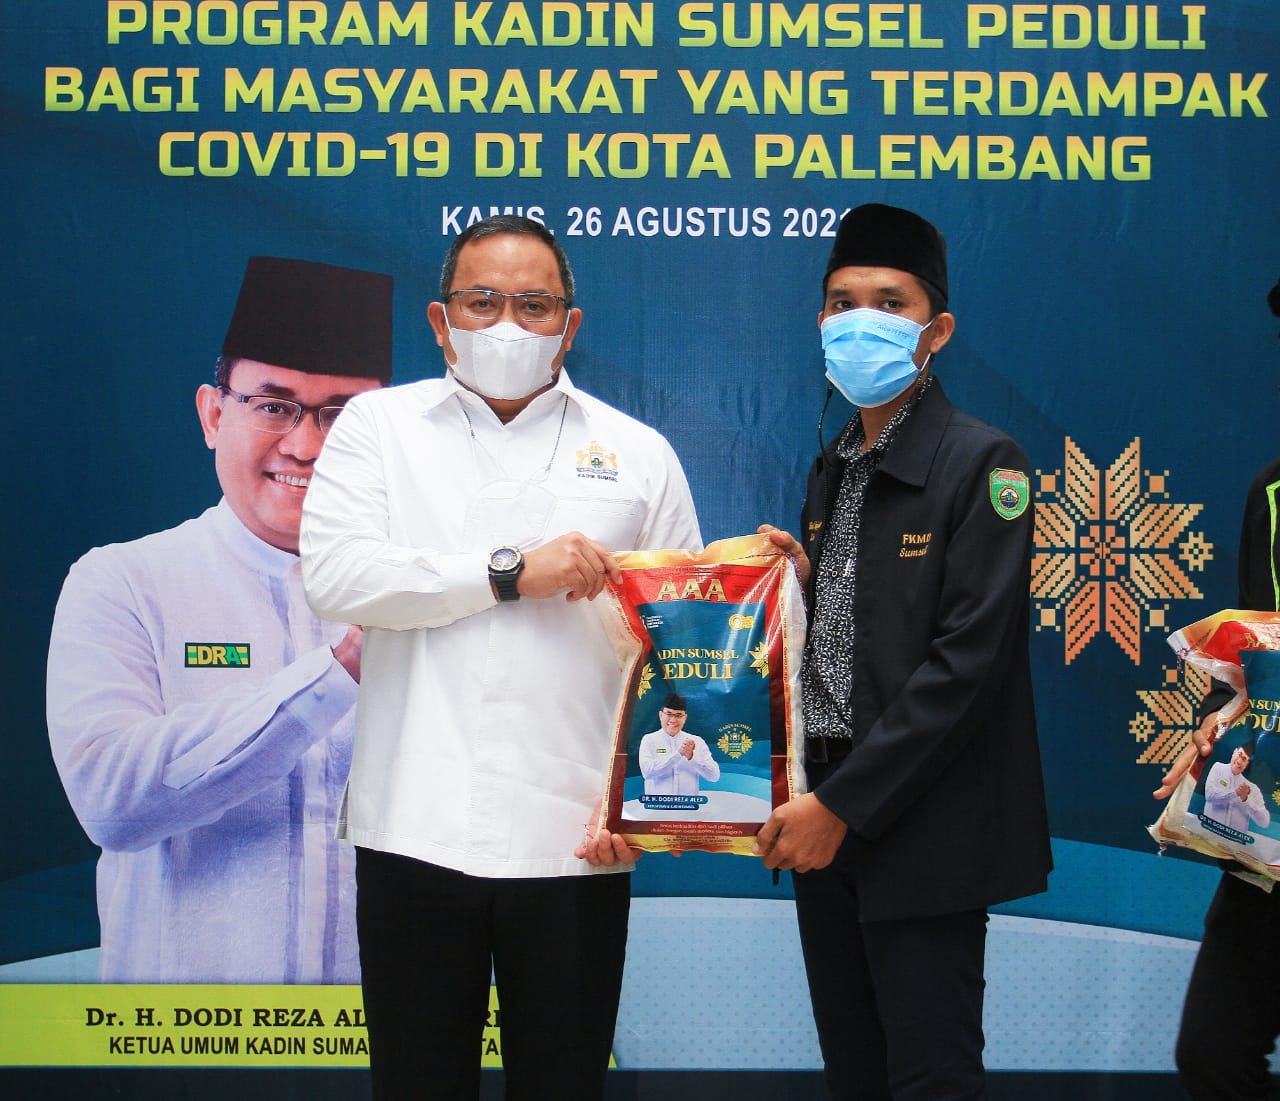 Ketua Umum Kadin Sumsel Dodi Reza Bareng Mahasiswa Beri Bantuan warga Terdampak COVID-19